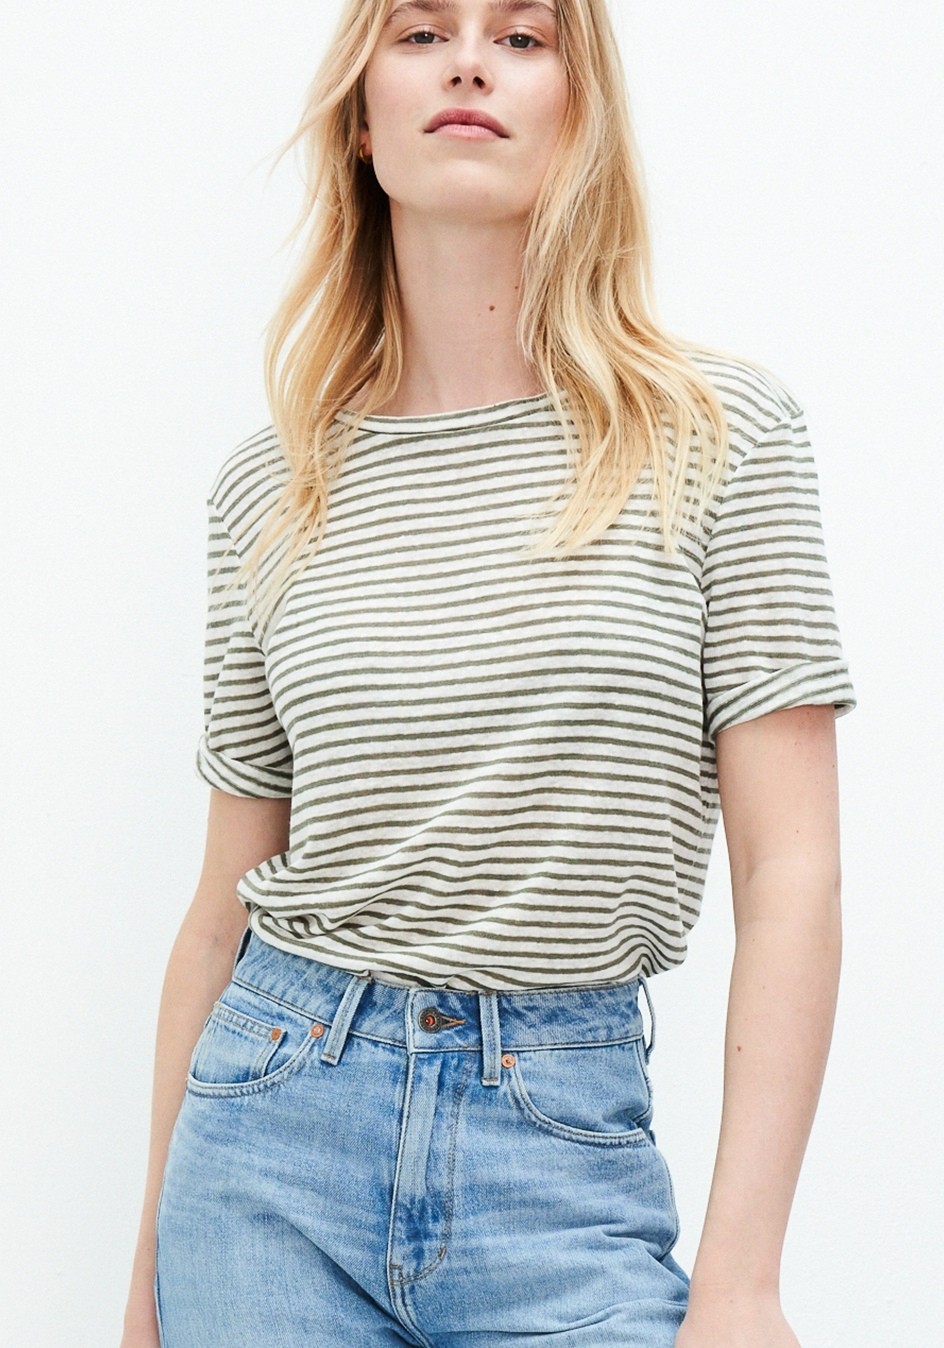 T-Shirt Olivia Striped Tee Off White-Sage Green